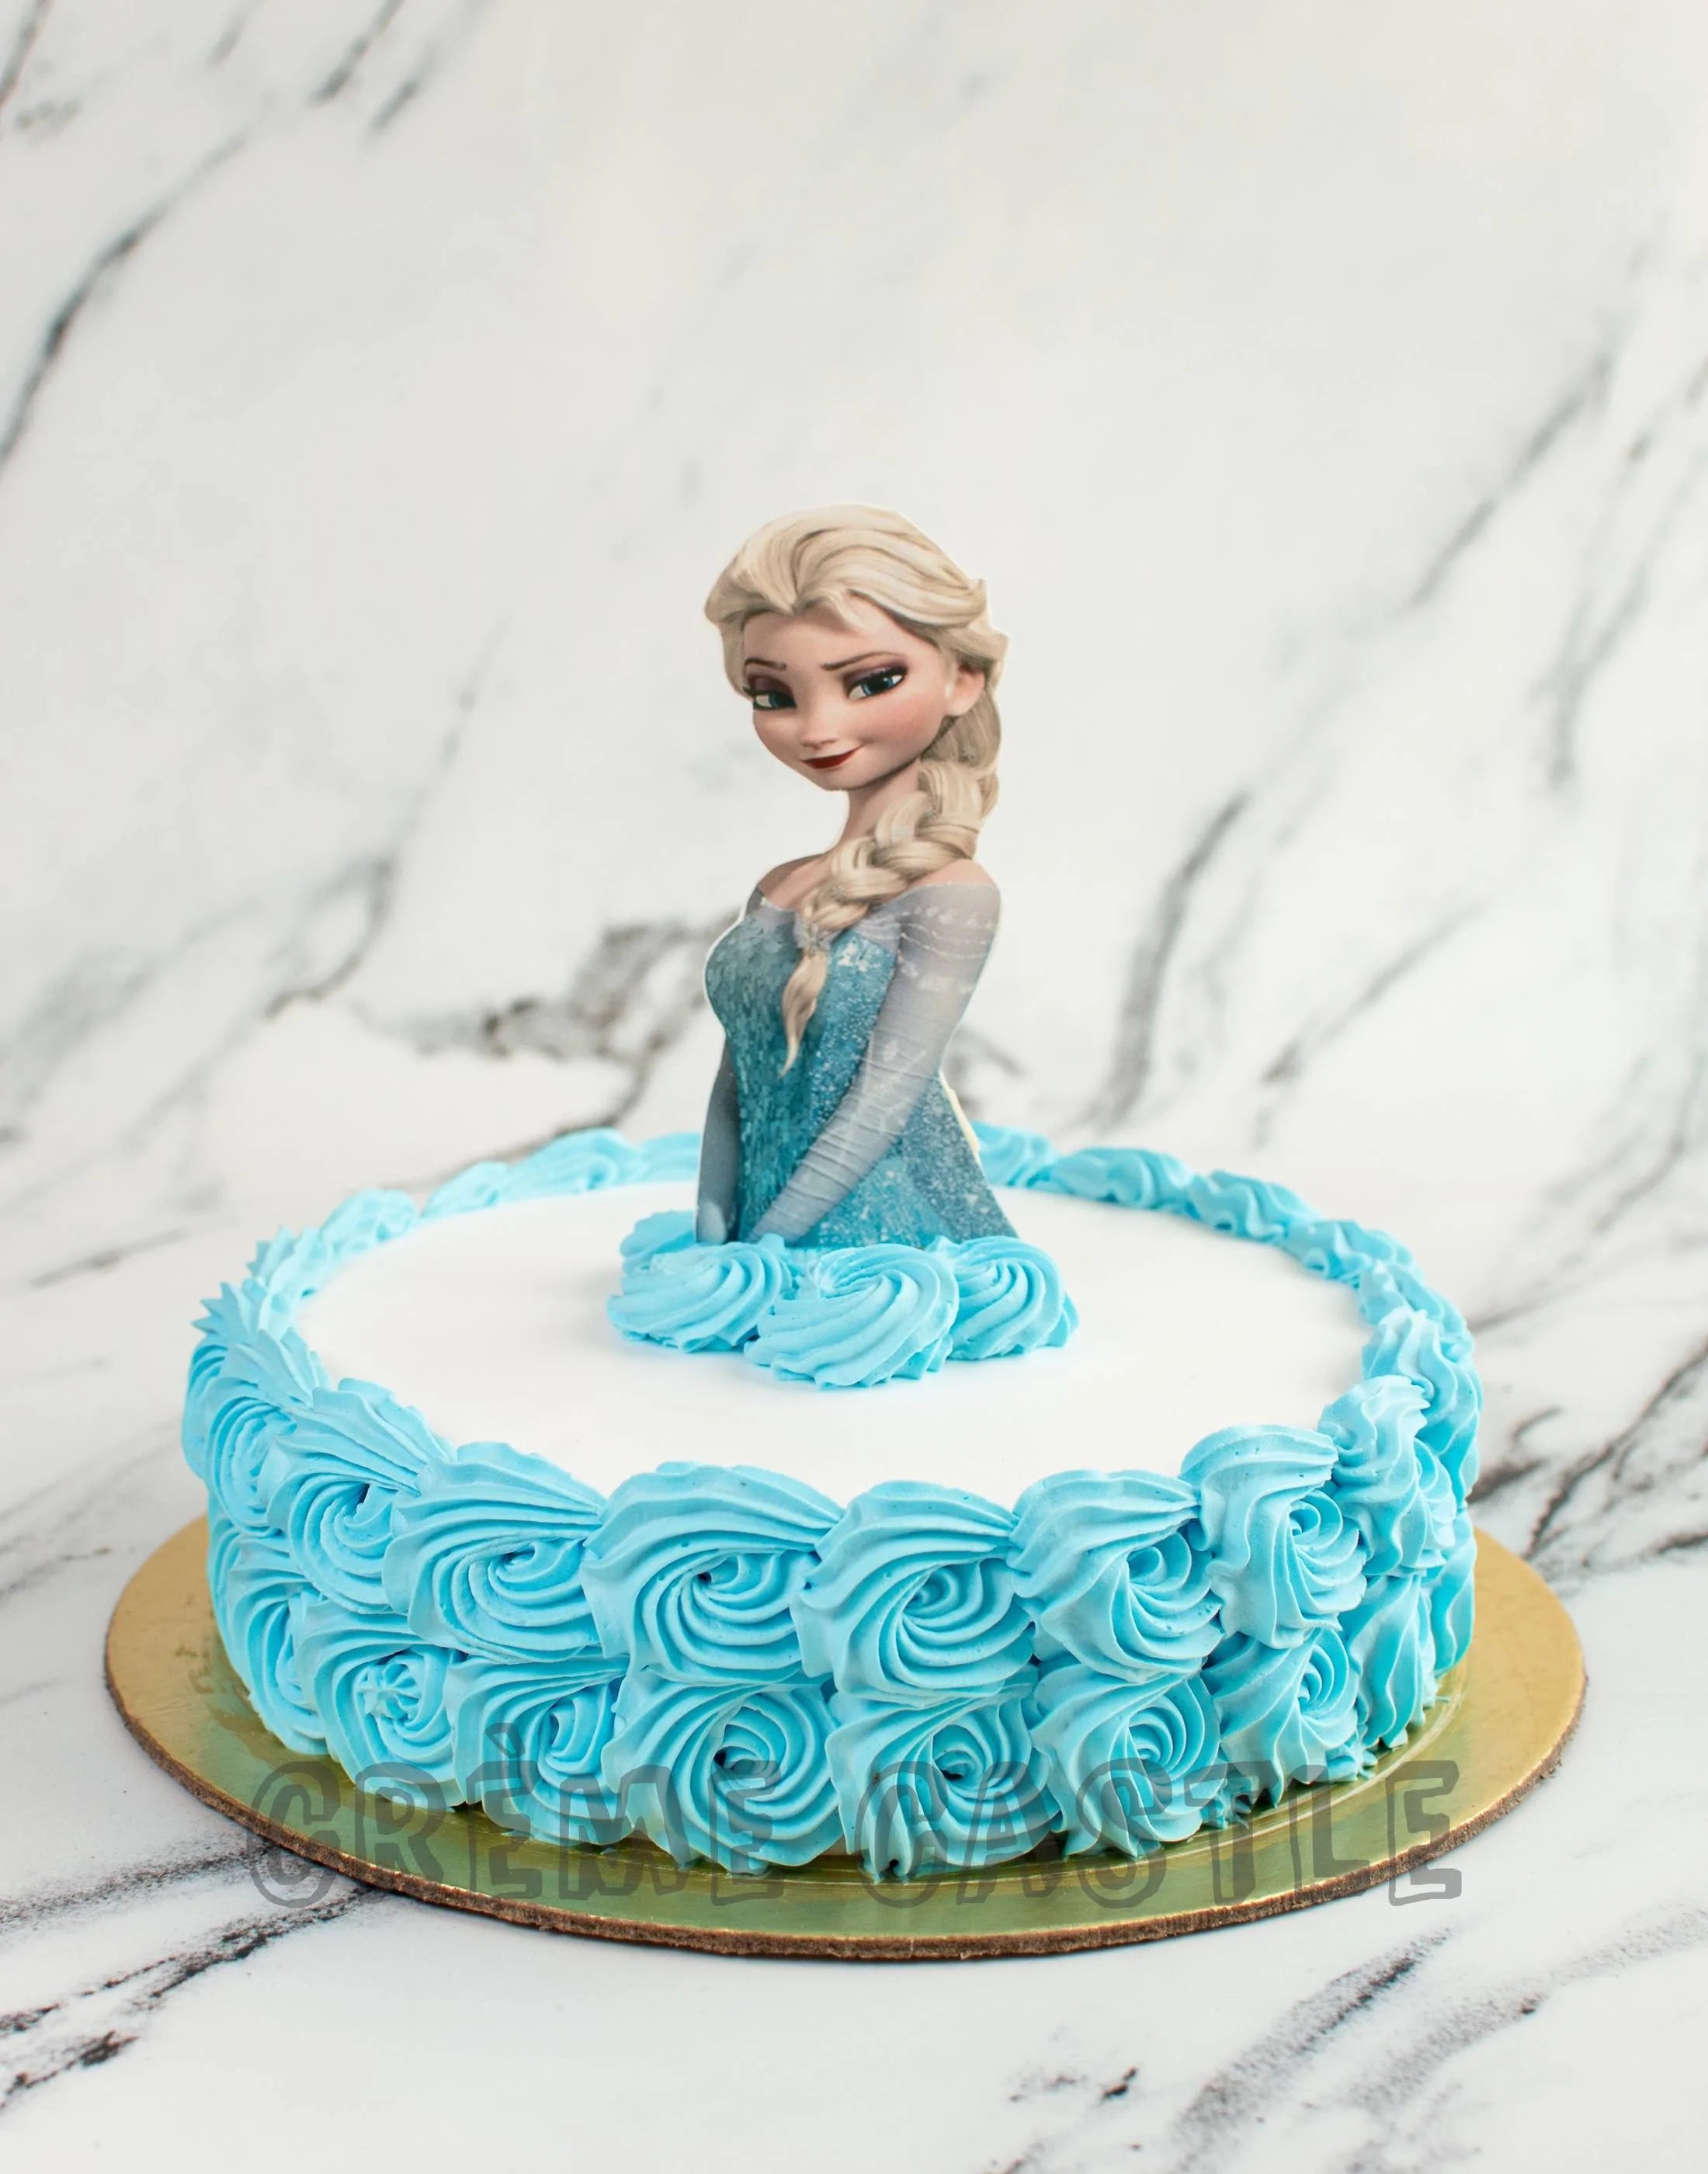 Best Frozen Theme Cake In Bengaluru | Order Online